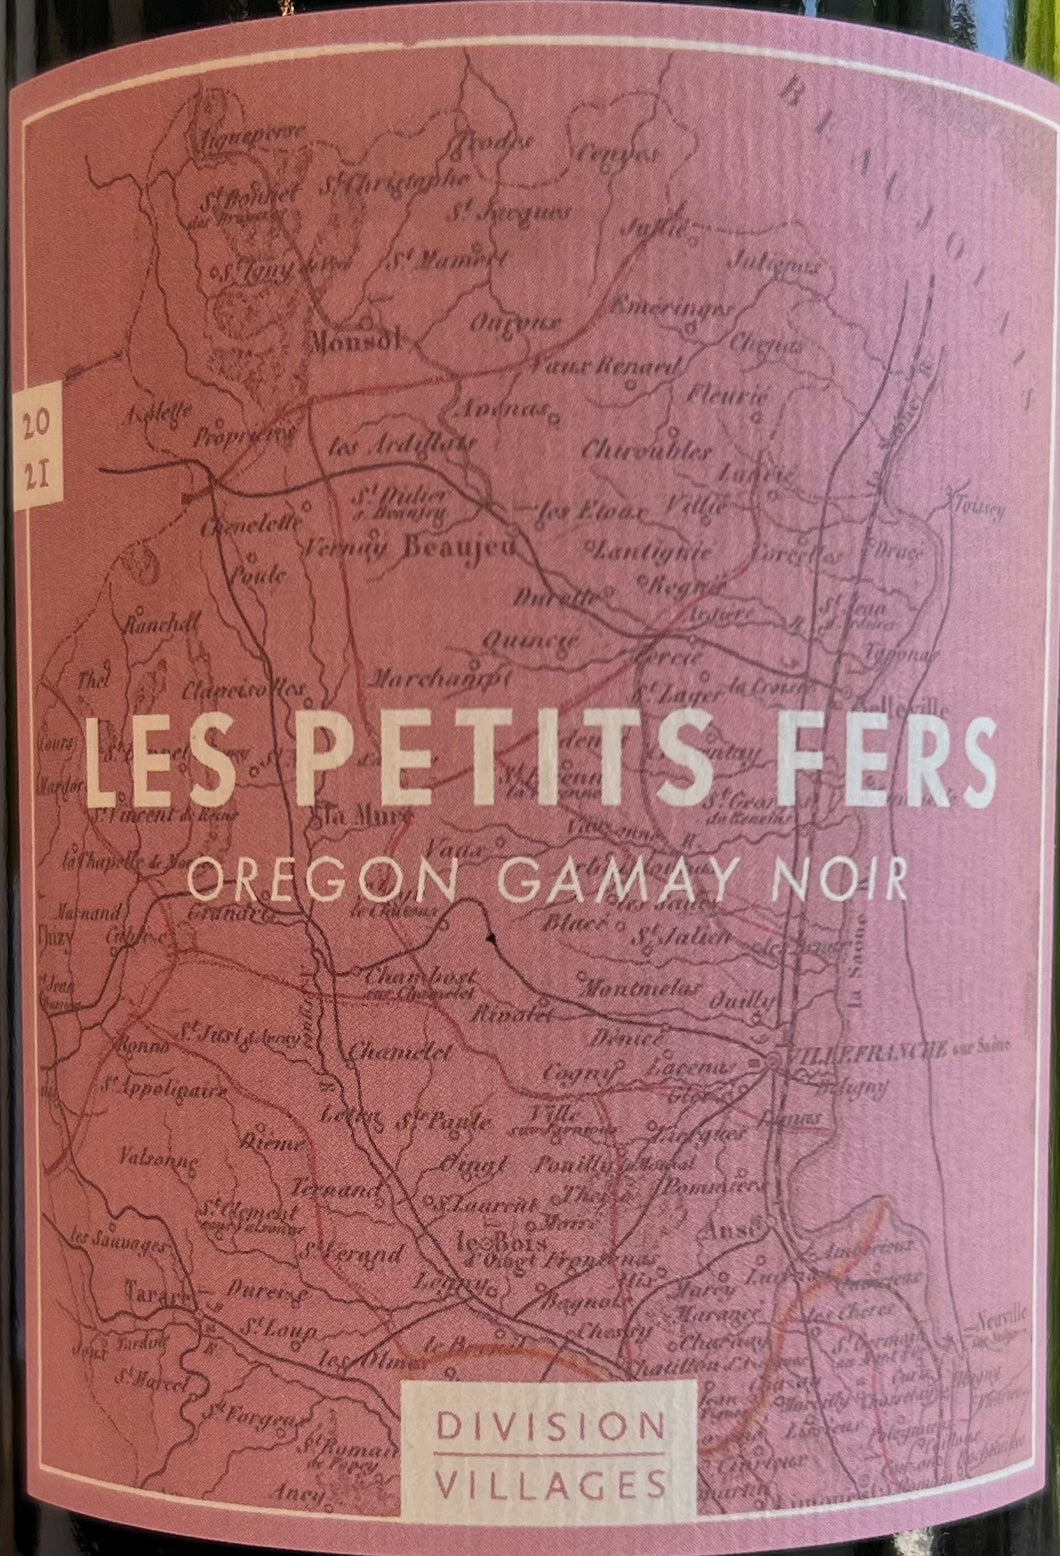 Division-Villages 'Les Petits Fers' - Gamay